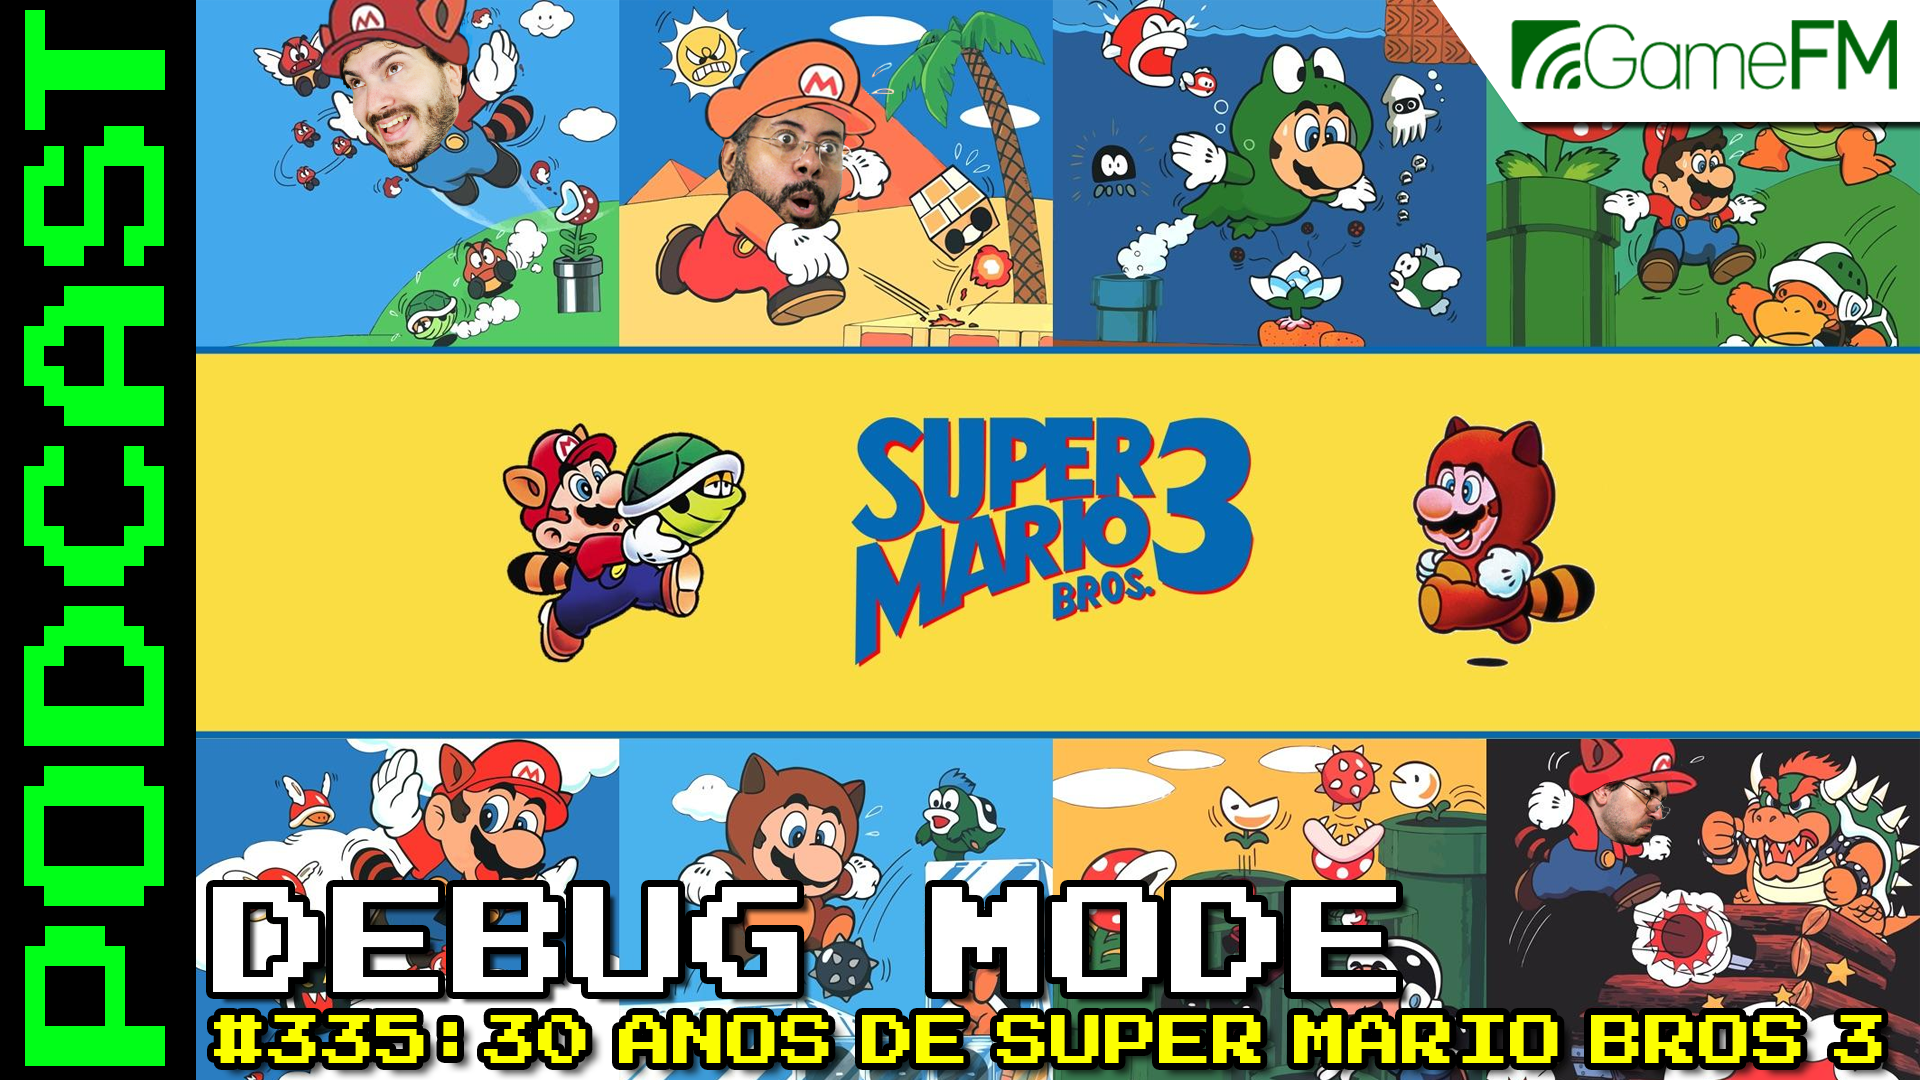 Especial: 30 anos de Super Mario